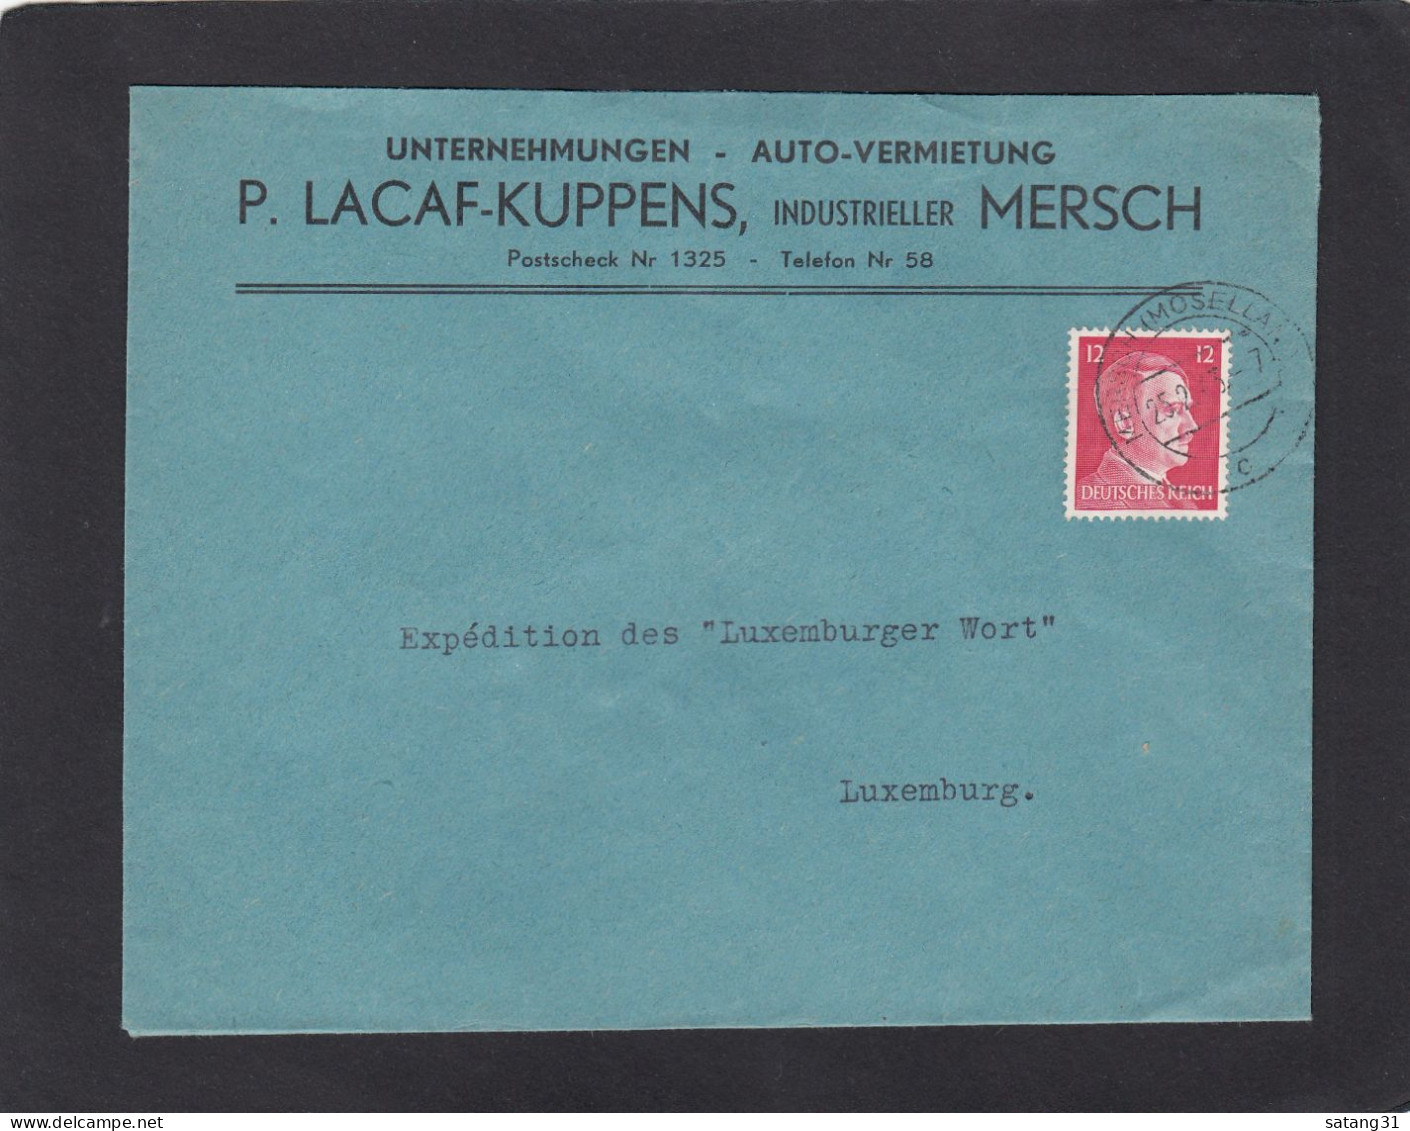 UNTERNEHMUNGEN - AUTO-VERMIETUNG, MERSCH. - 1940-1944 Duitse Bezetting